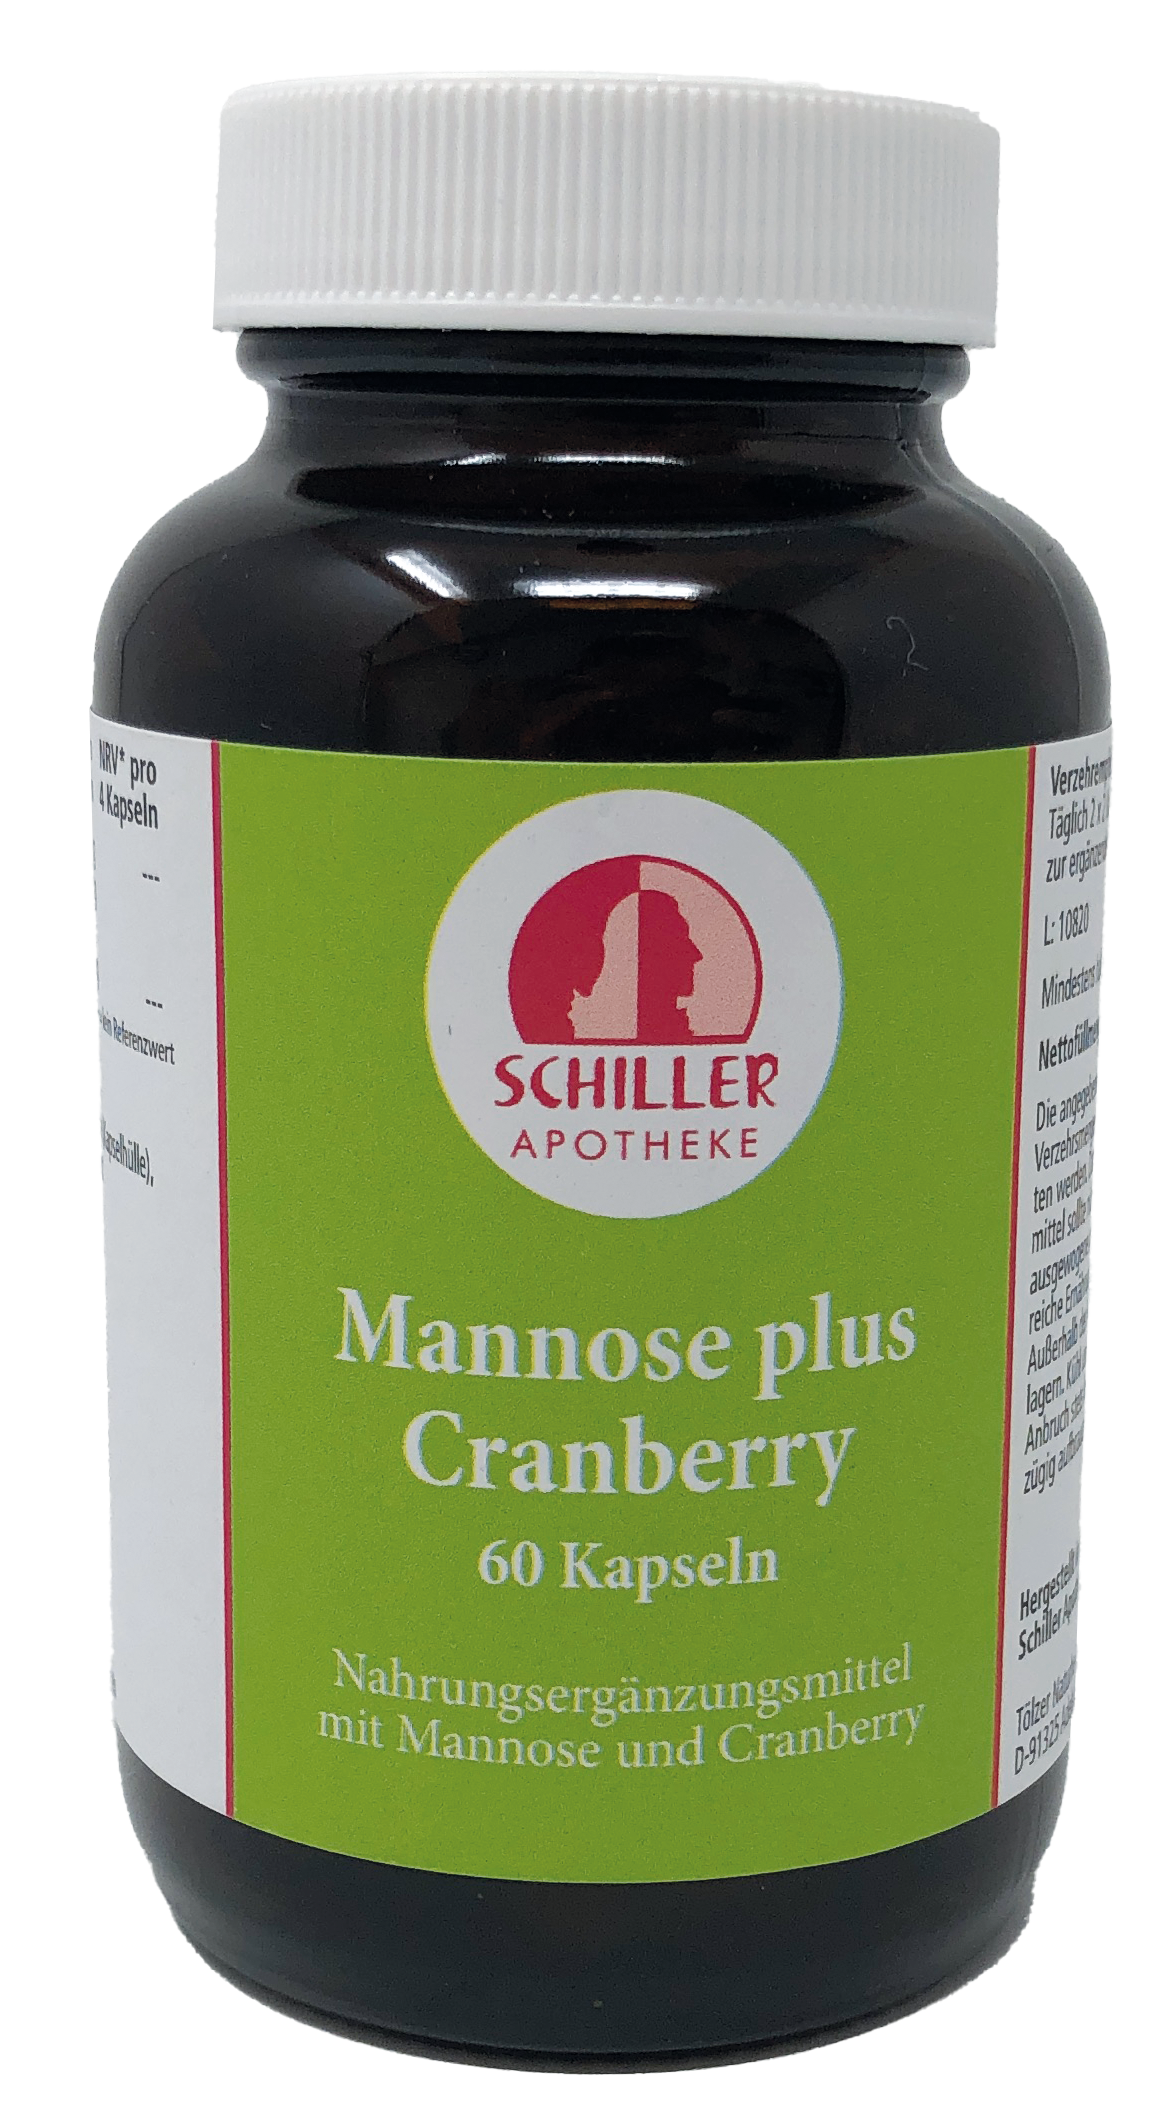 Mannose plus Cranberry - Kapseln